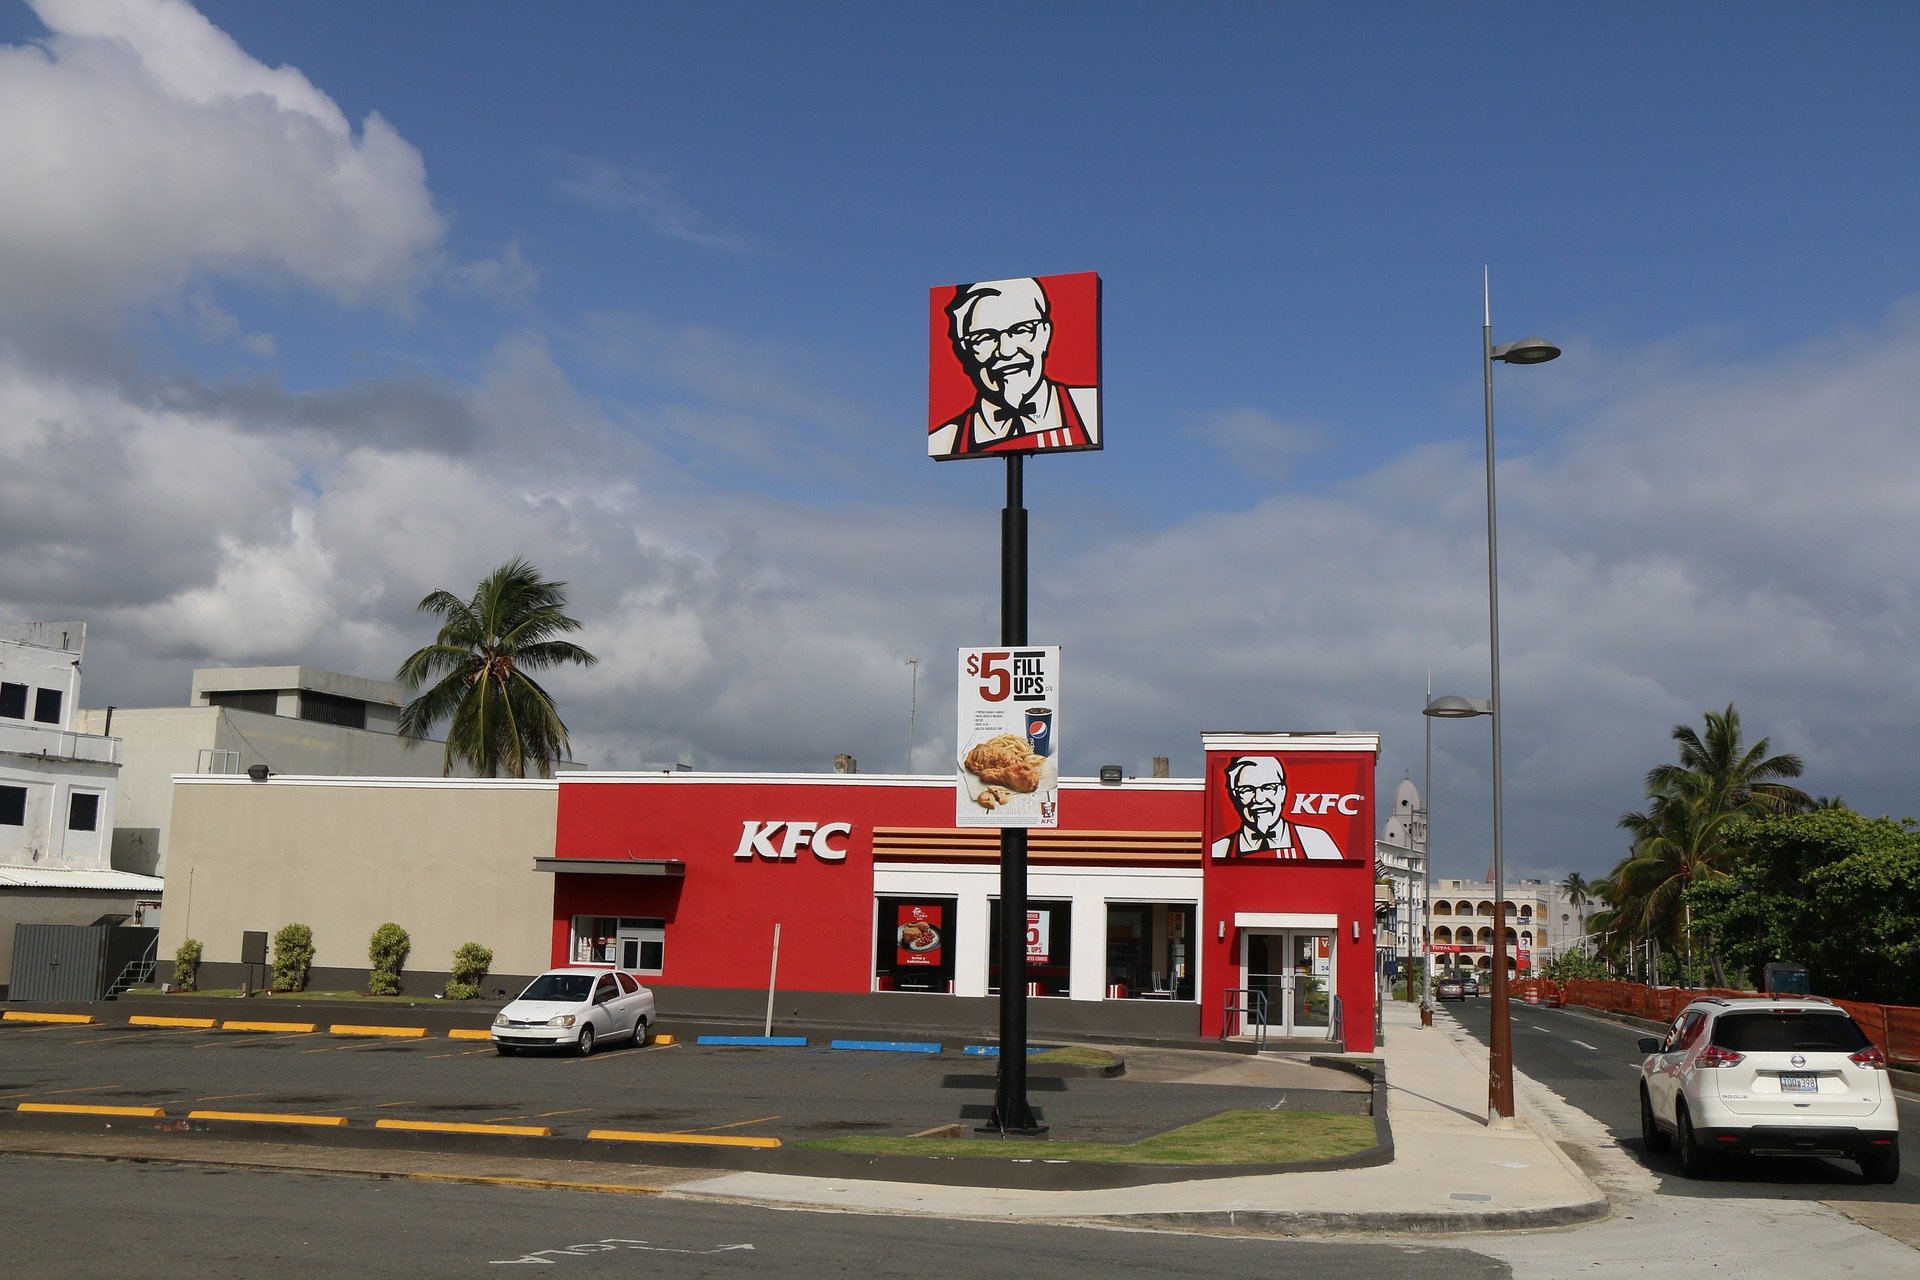 Establecimiento de KFC. | Foto: Pixabay